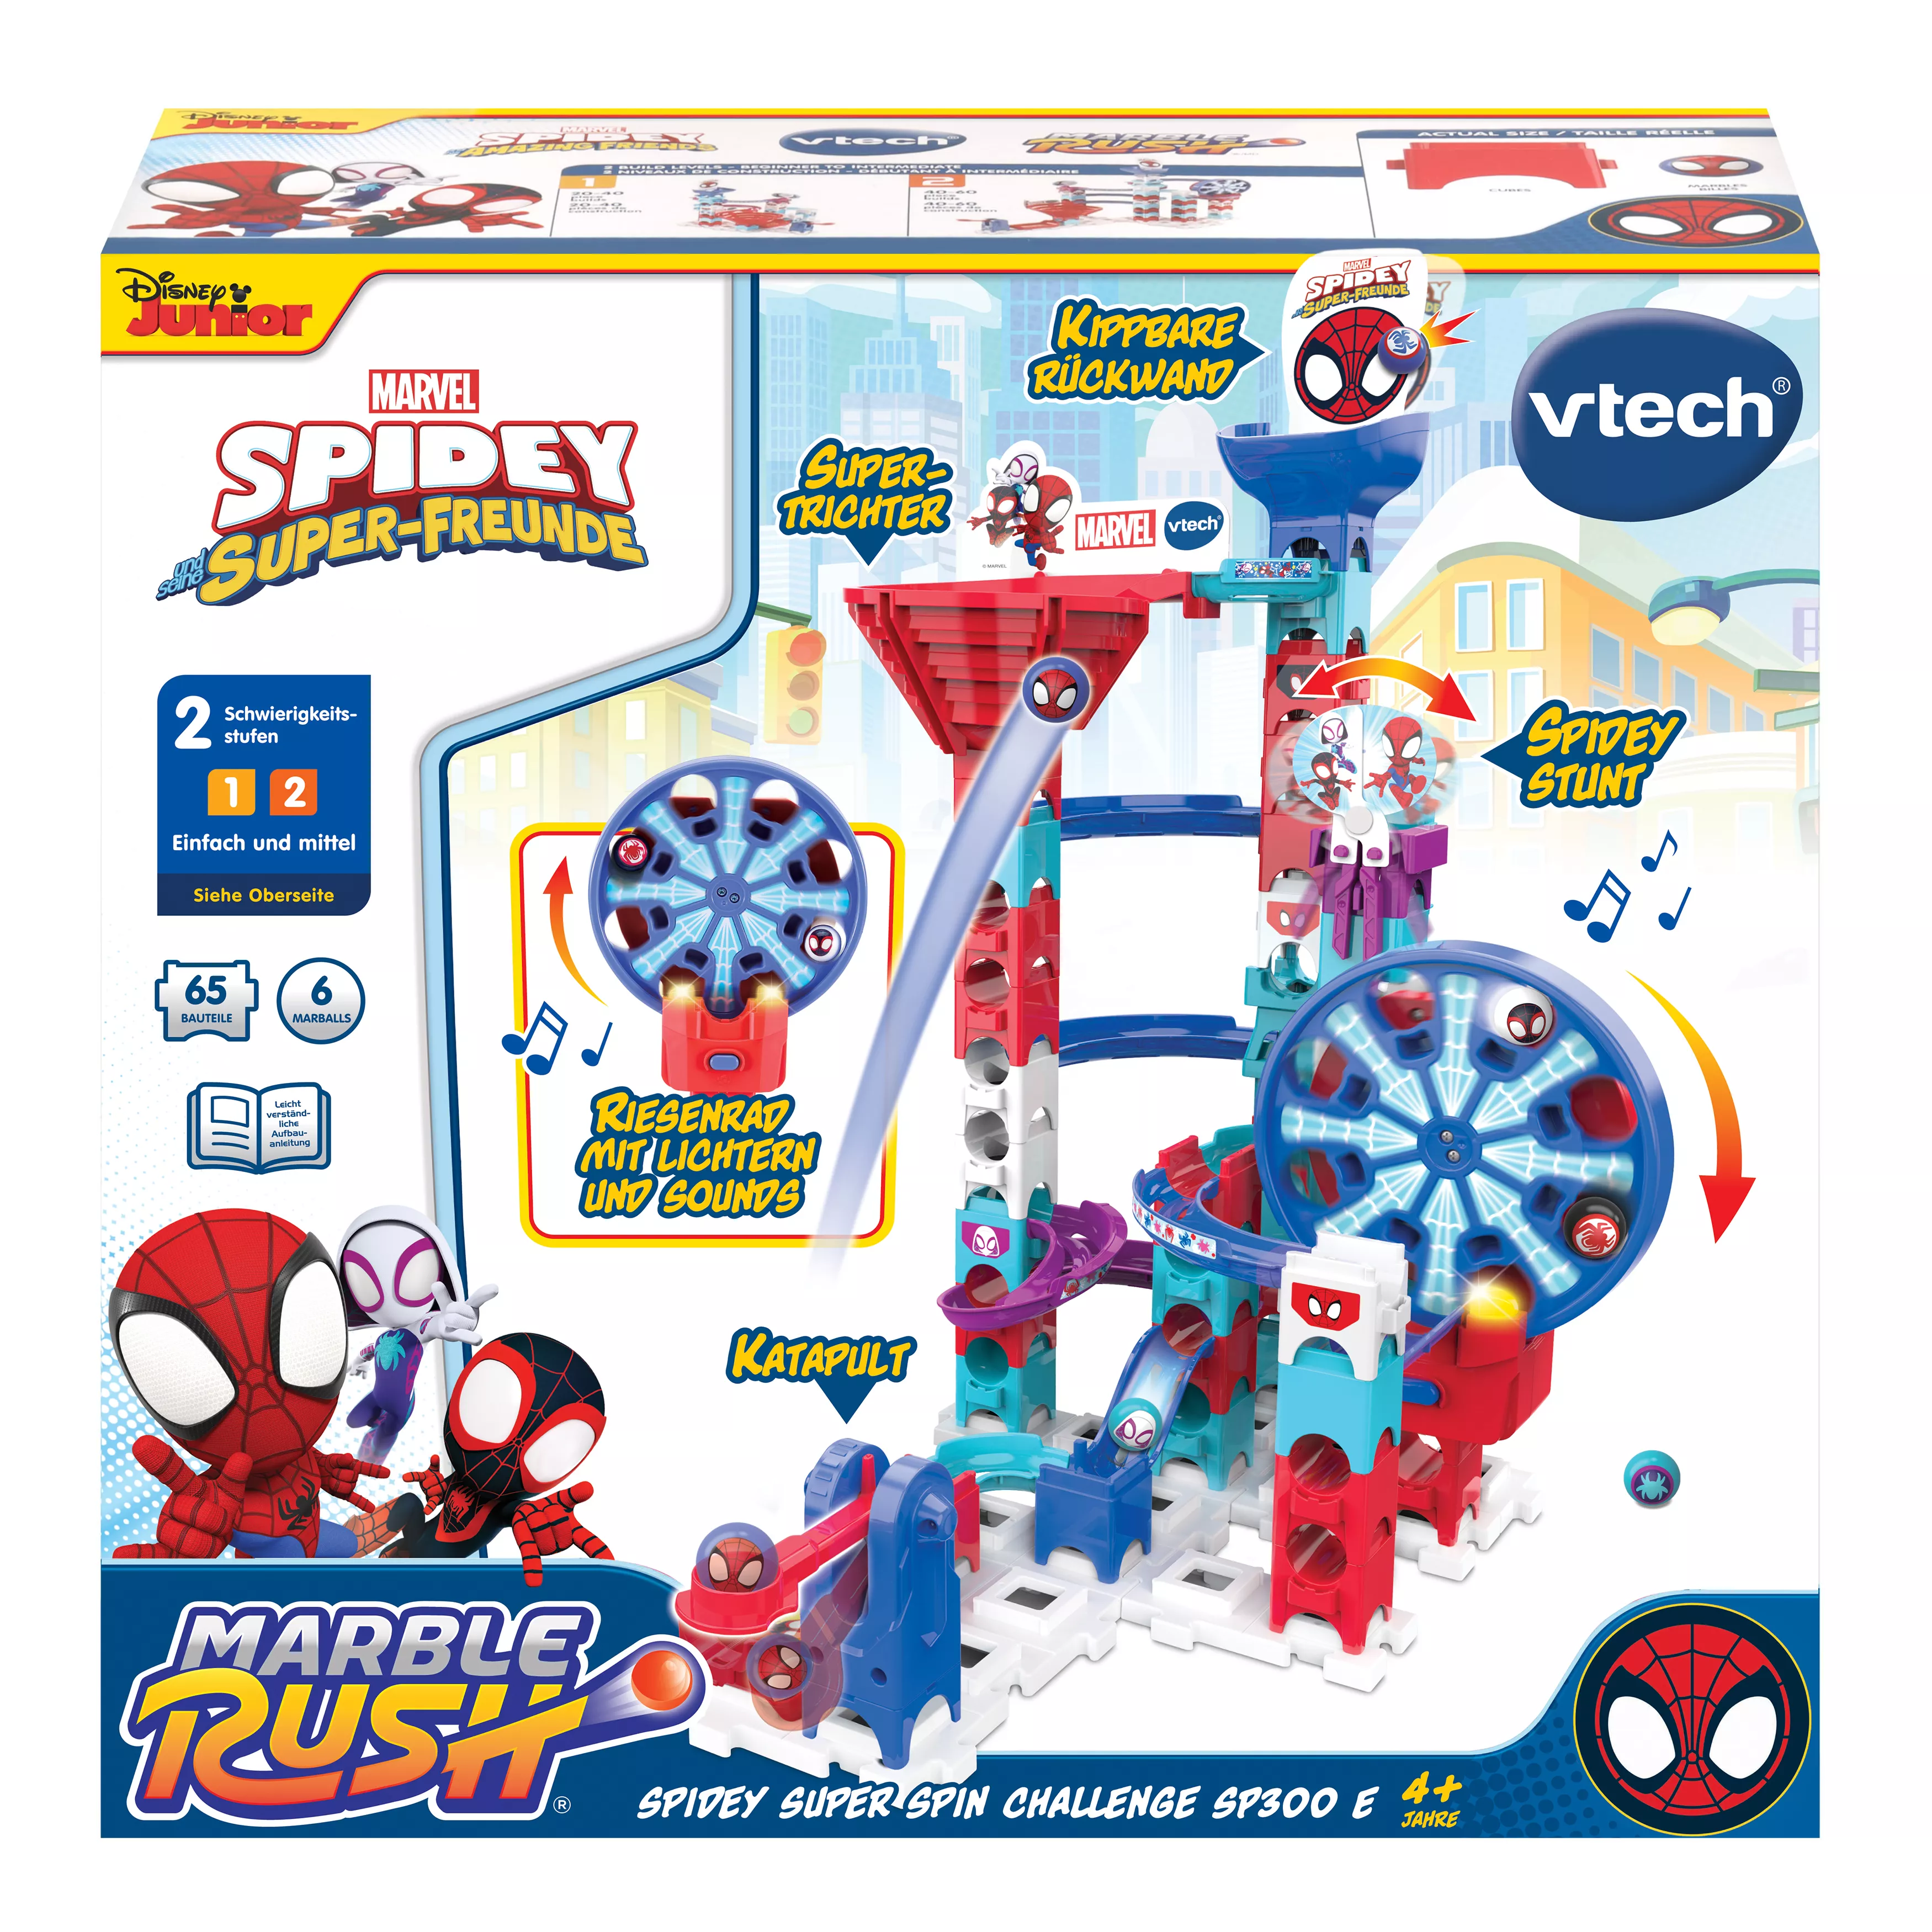 VTech Marble Rush Spidey Super Spin Challenge (80-561704)